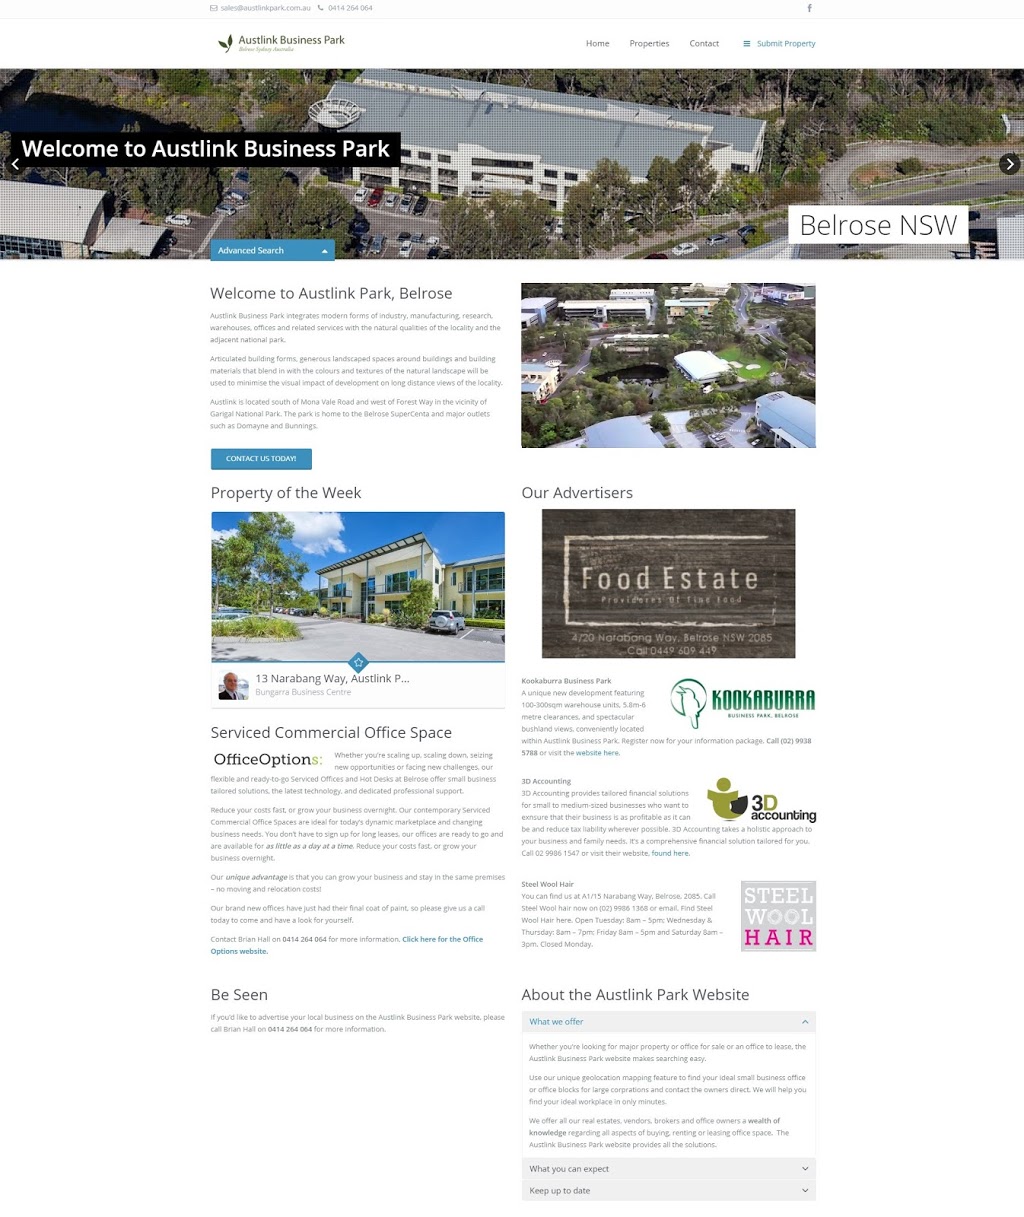 CKL Web Concepts | 62 Bellevue St, Shelly Beach NSW 2261, Australia | Phone: 0402 027 801